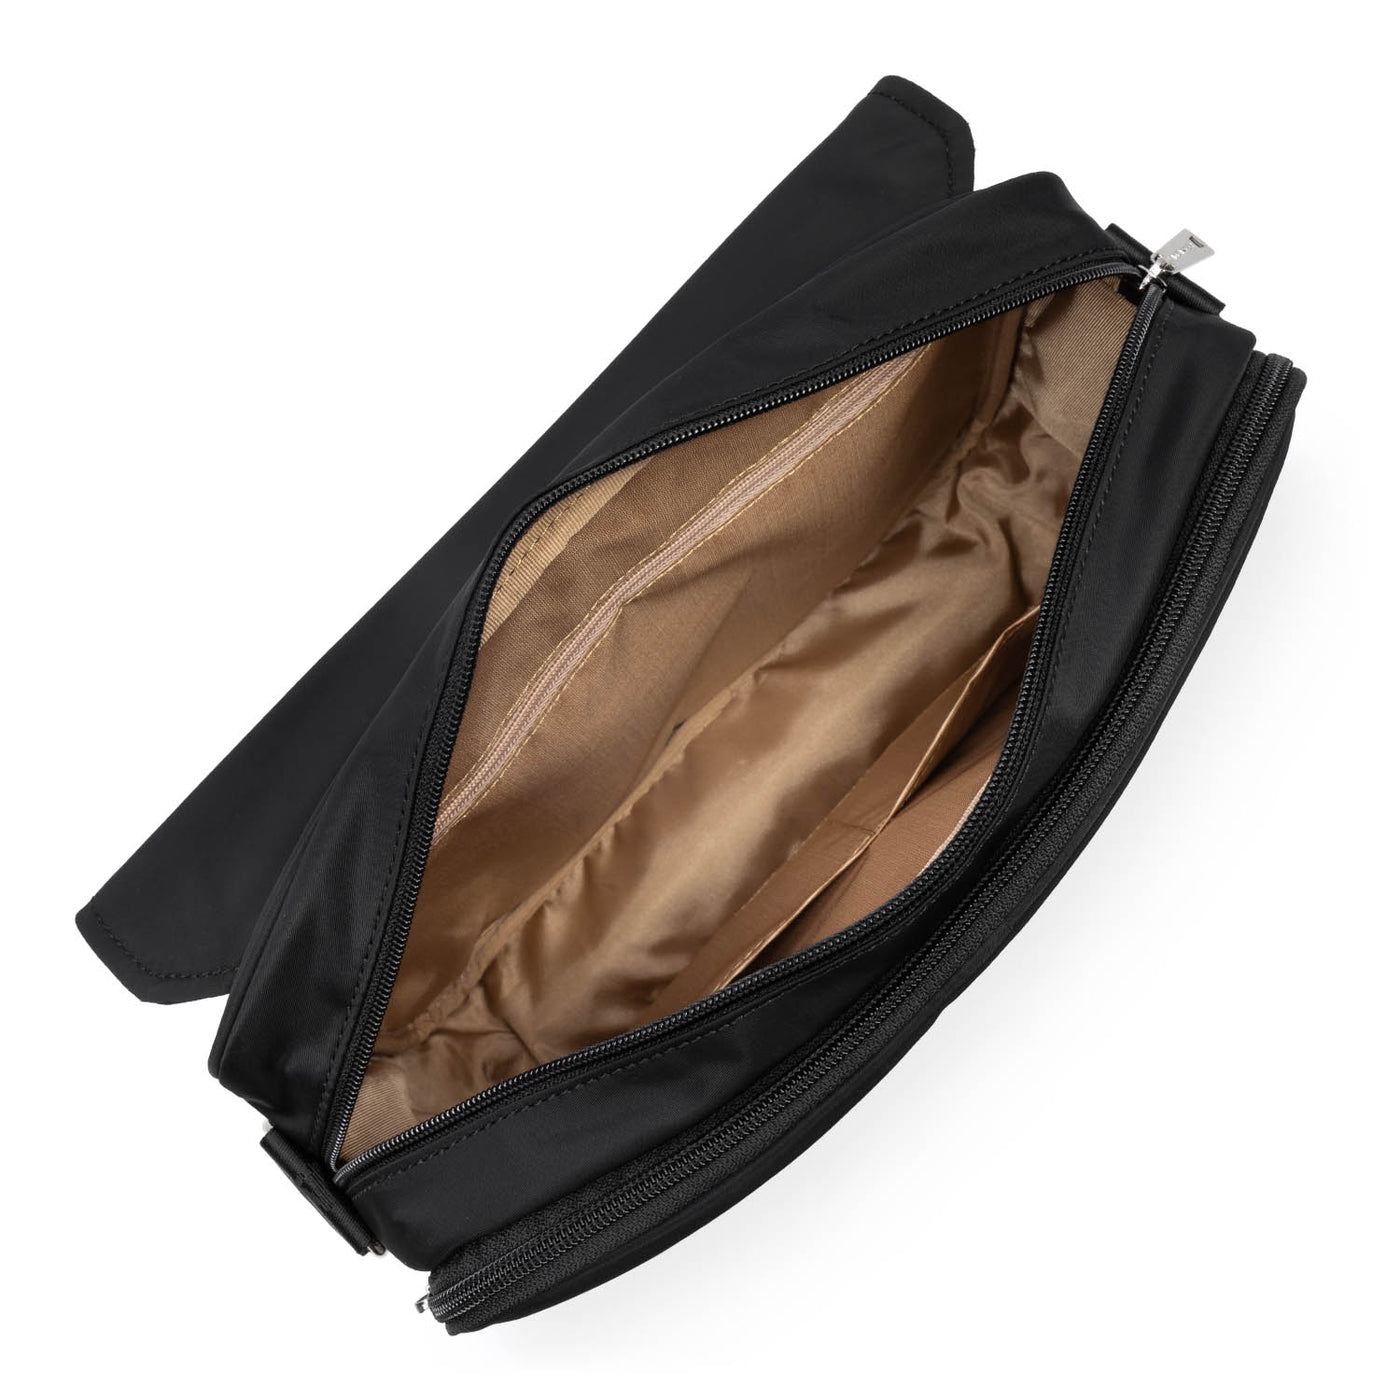 large messenger bag - basic vita #couleur_noir